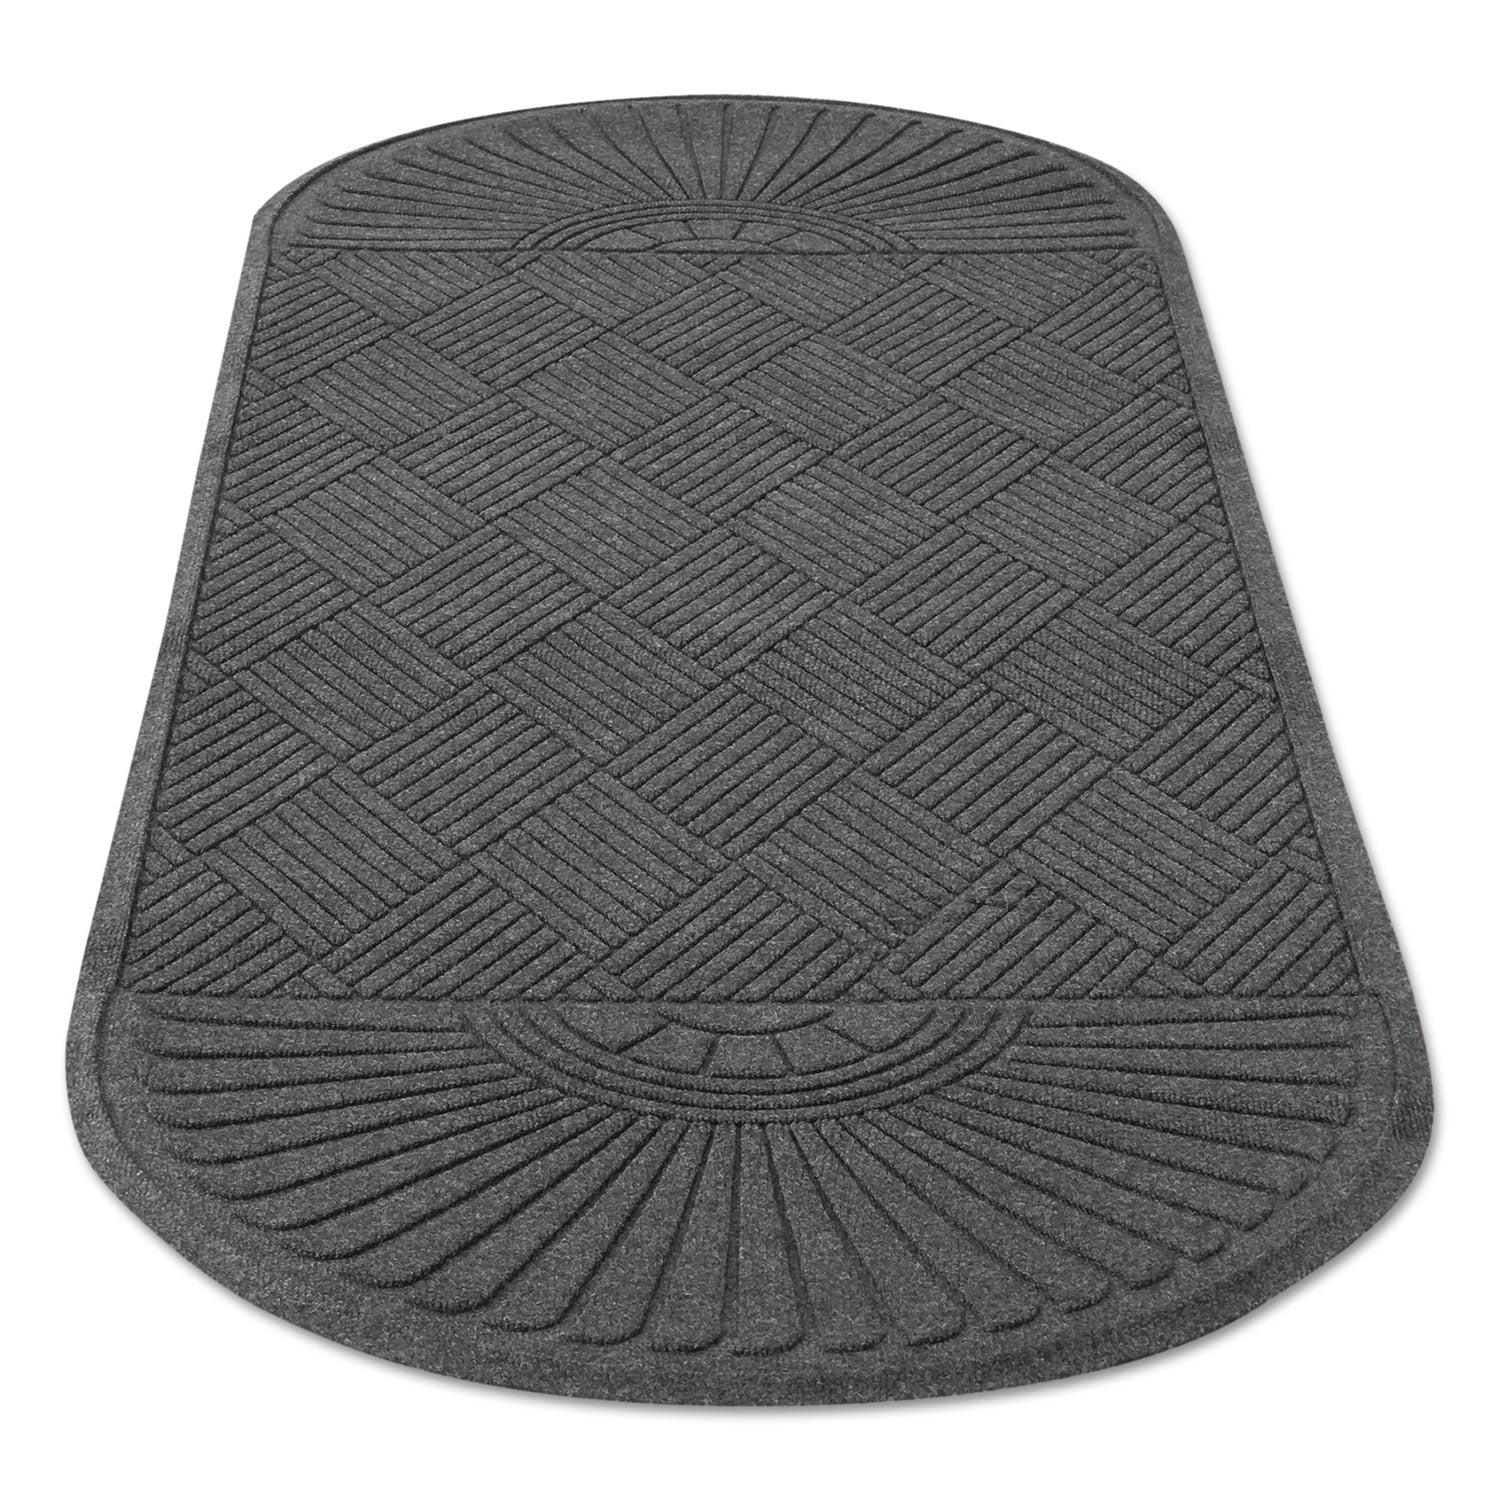 EcoGuard Diamond Floor Mat, Double Fan, 36 x 96, Charcoal - 